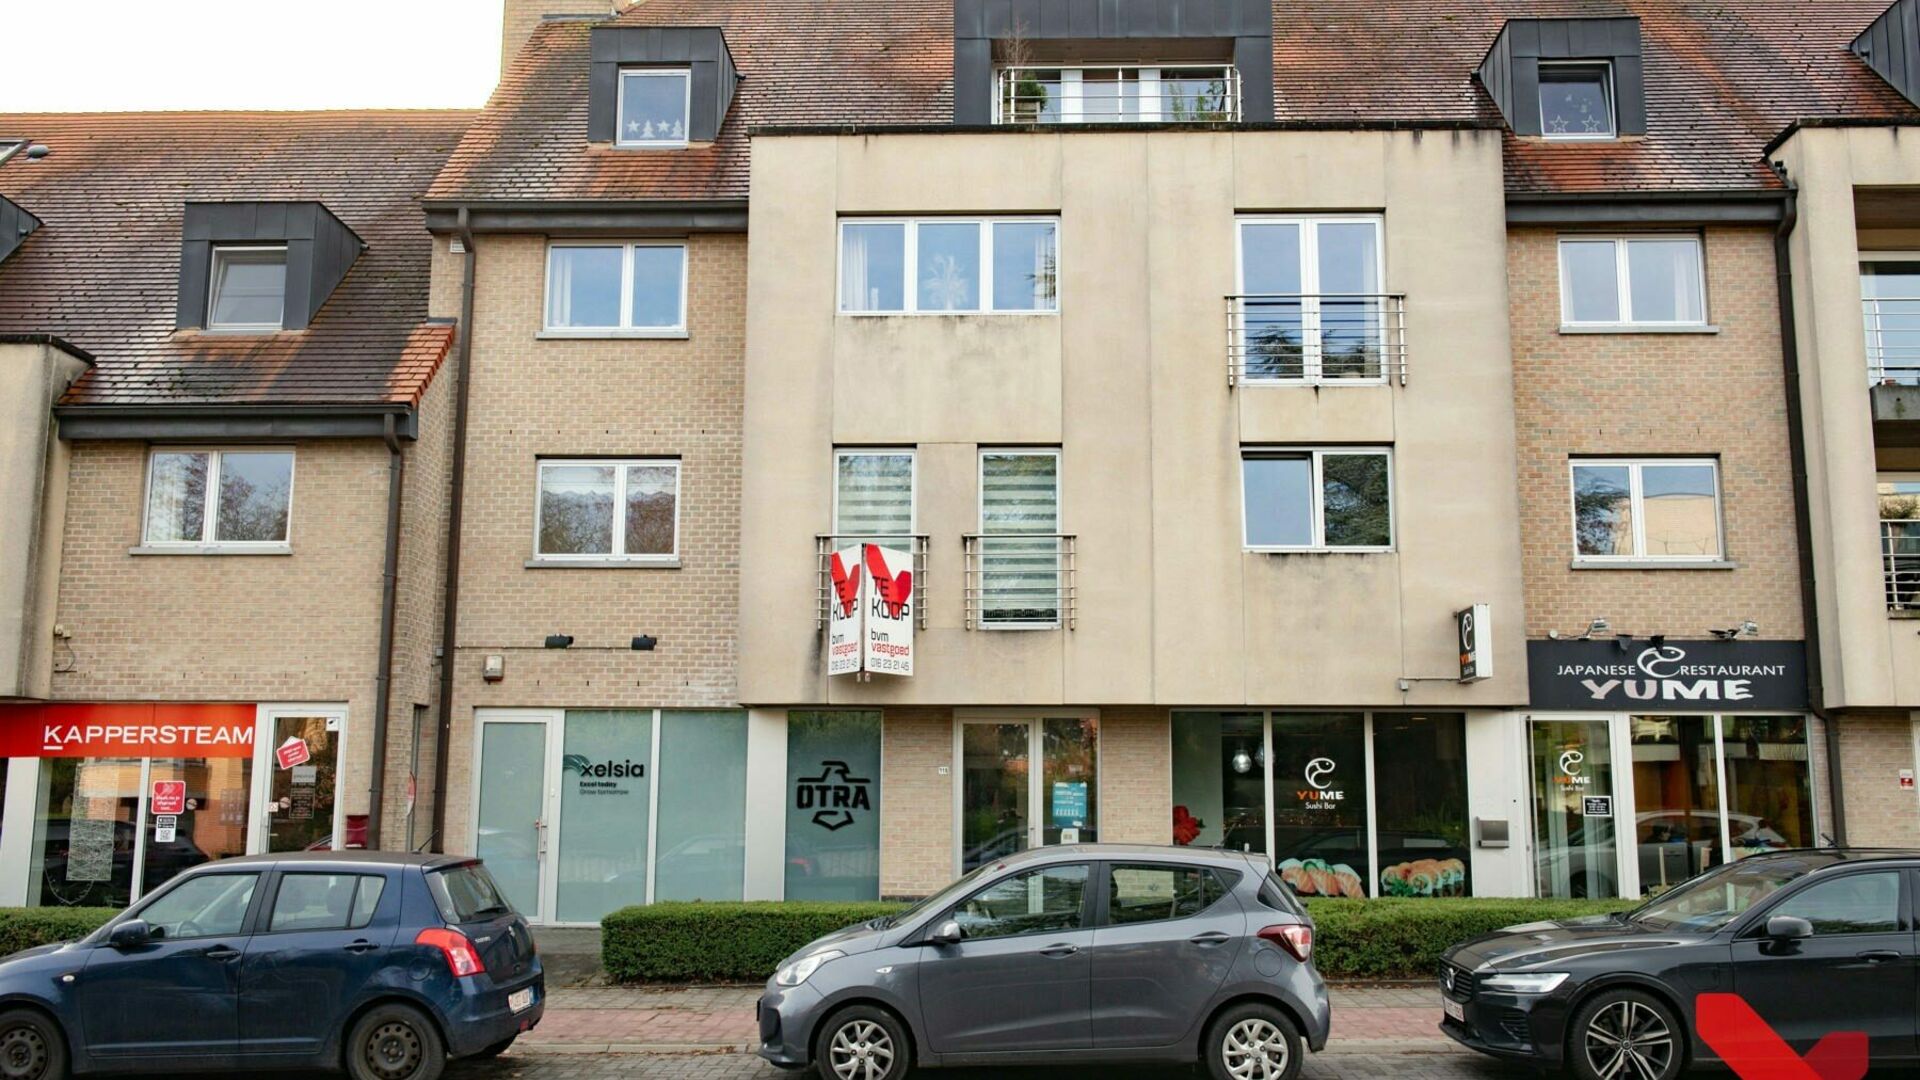 Flat for sale in Bierbeek